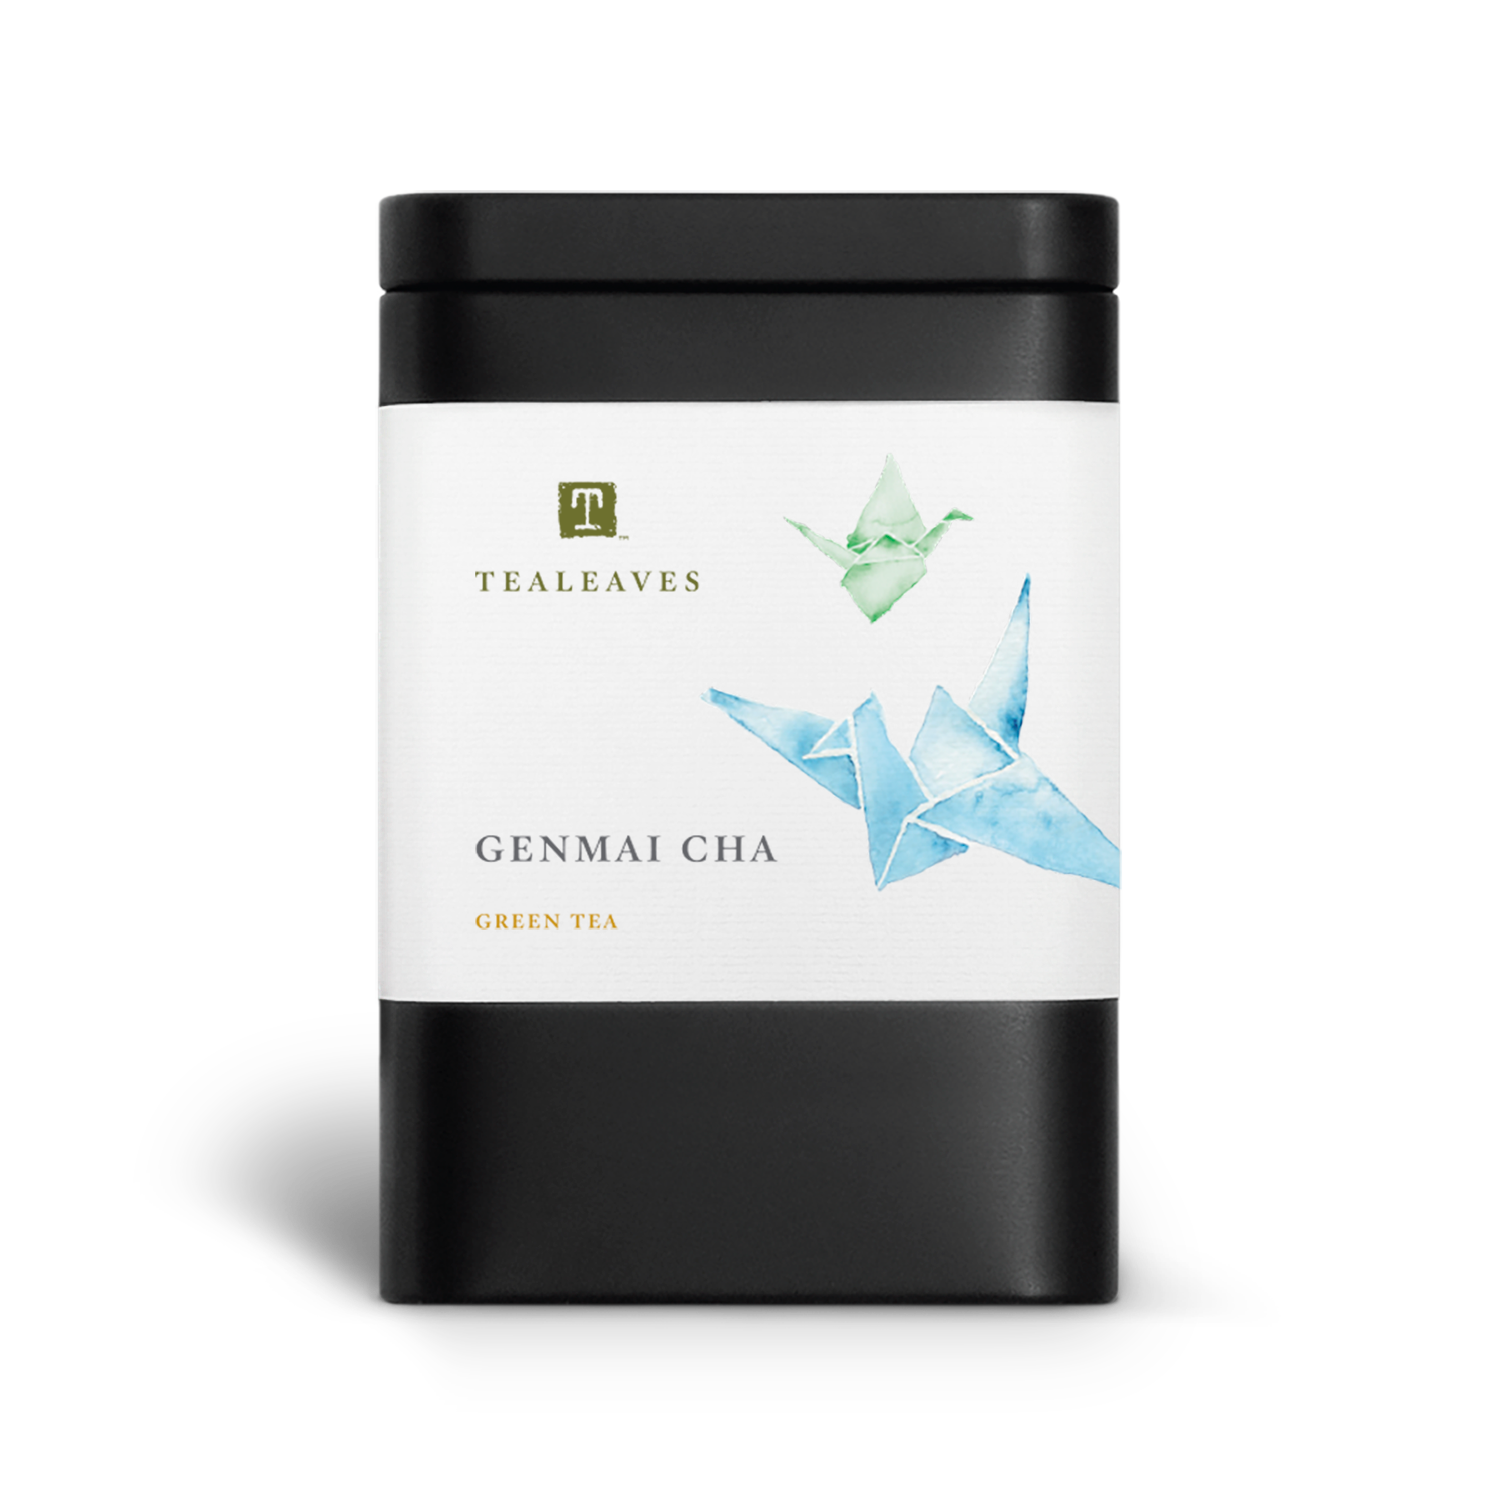 Genmai Cha loose leaf green tea in eco friendly tea packaging